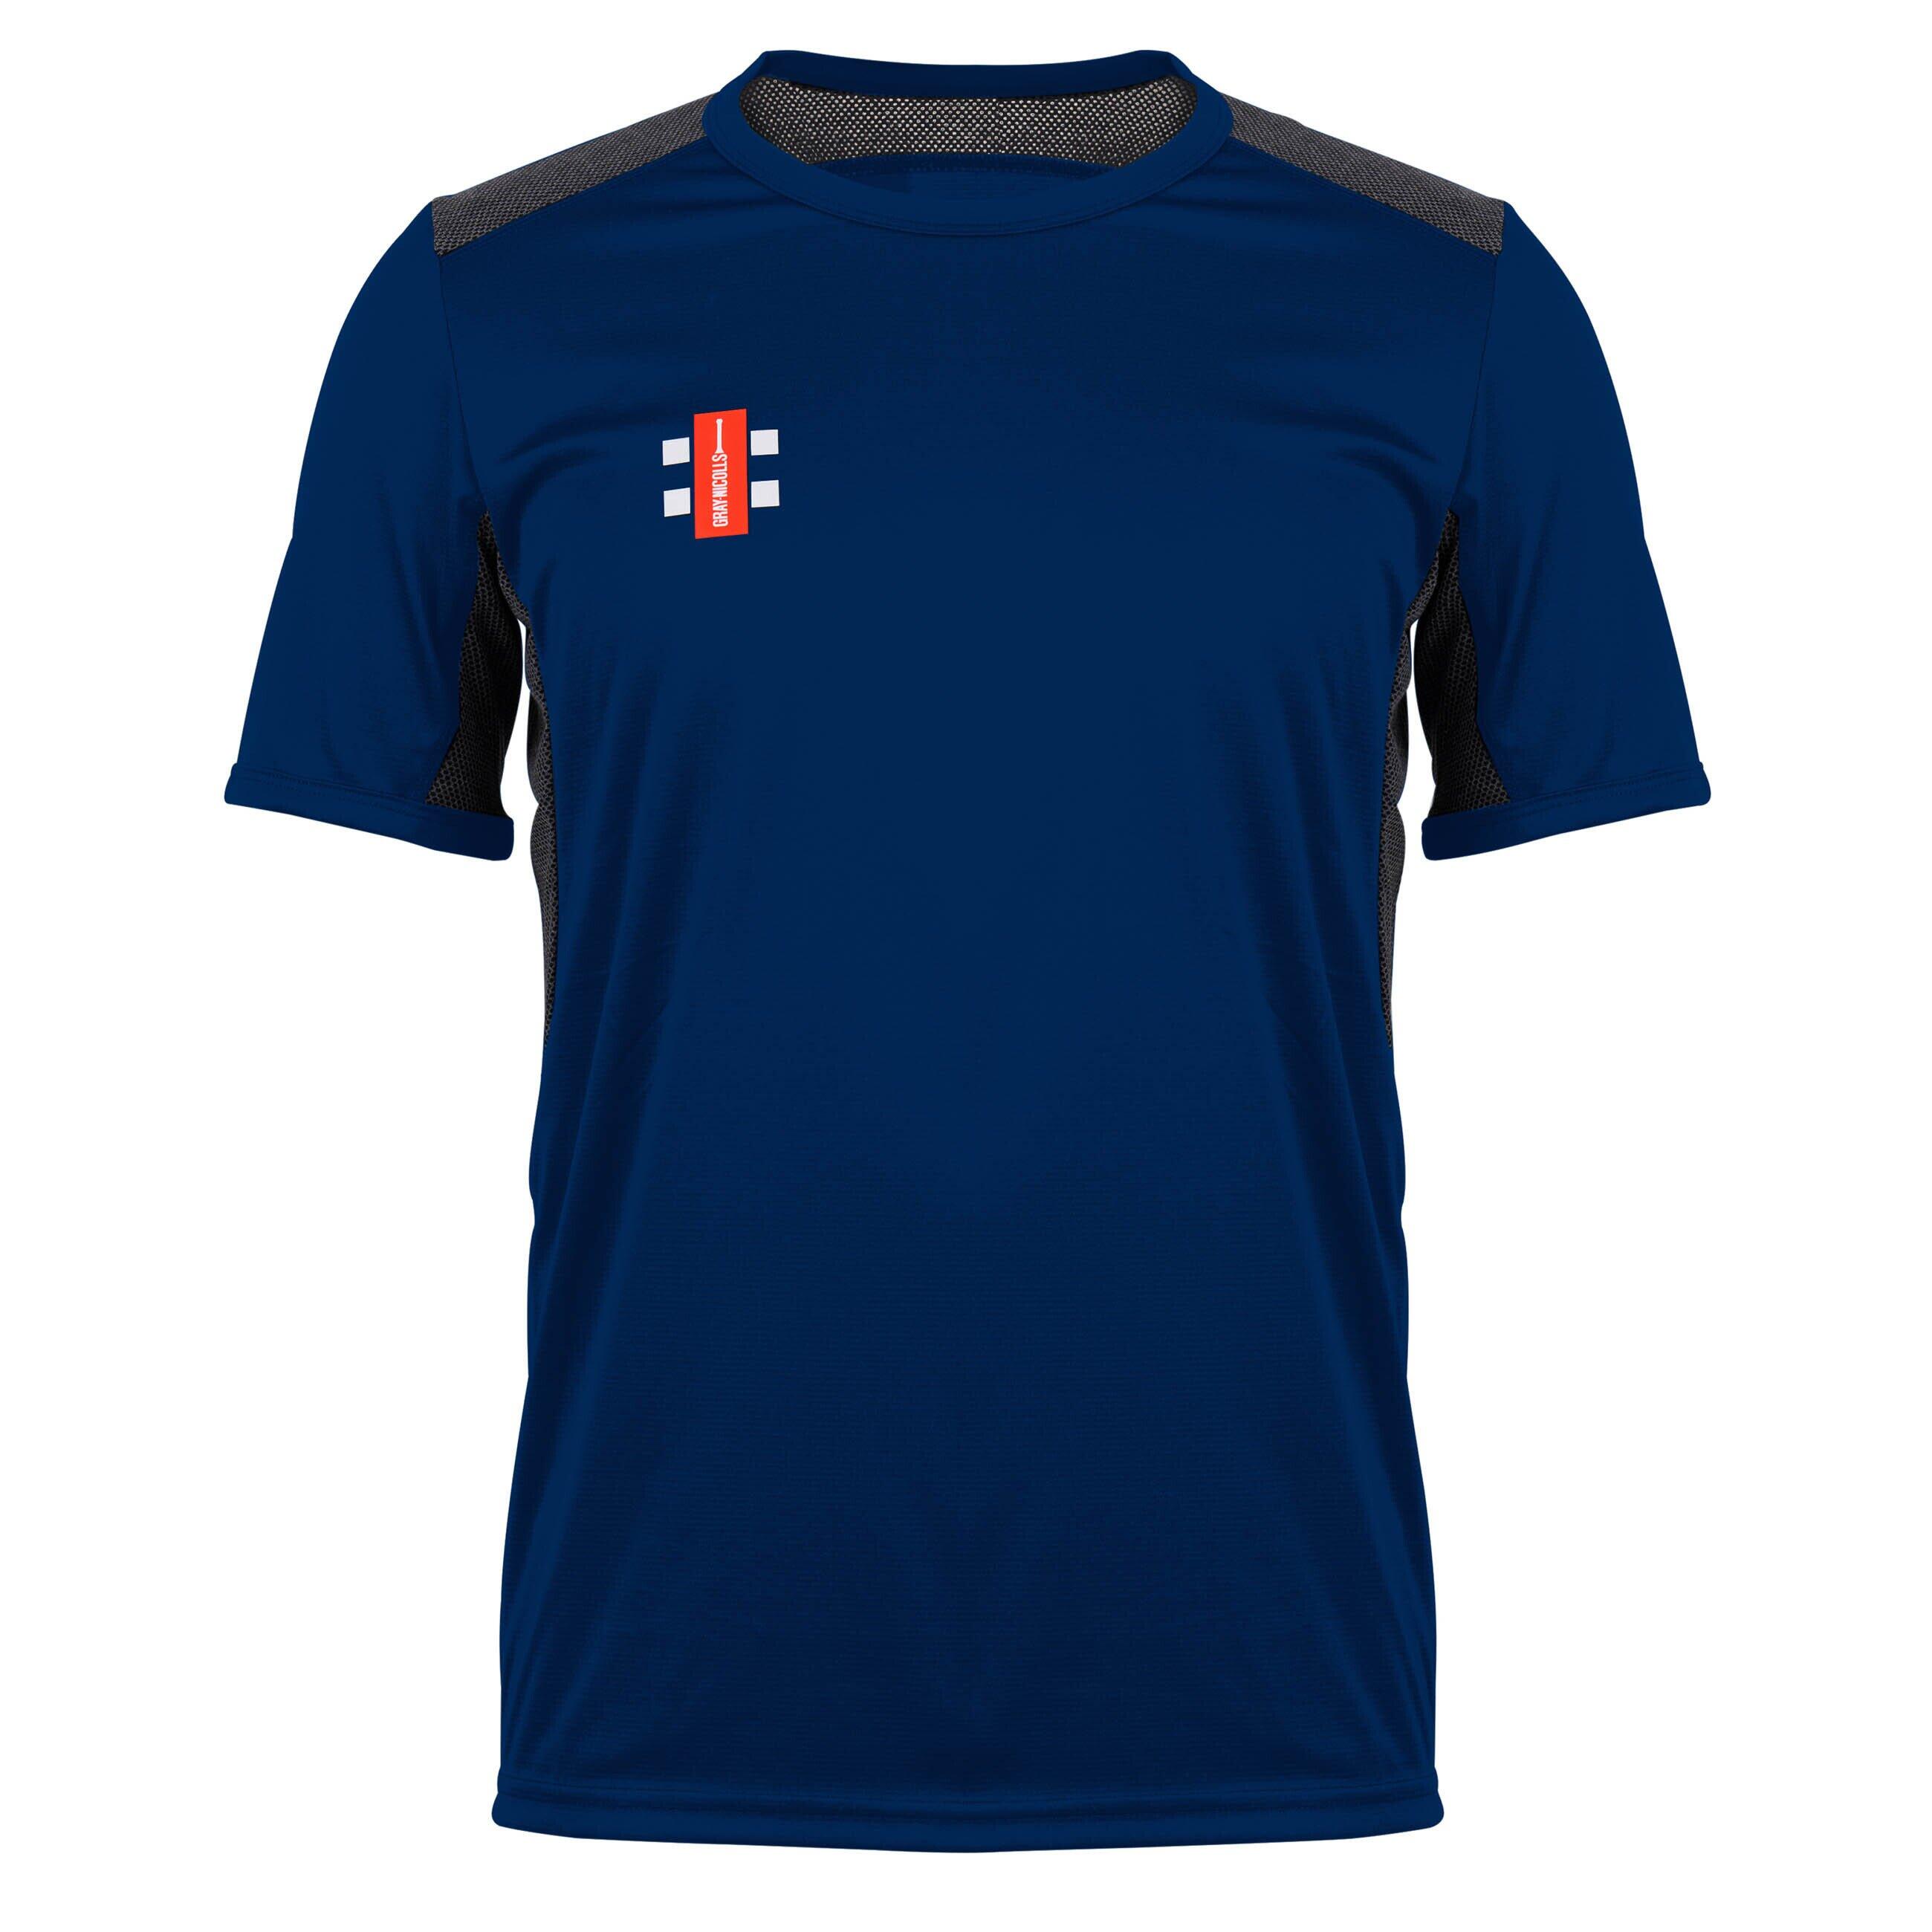 GRAY-NICOLLS Pro Performance Short Sleeve Men's T-Shirt,  Navy